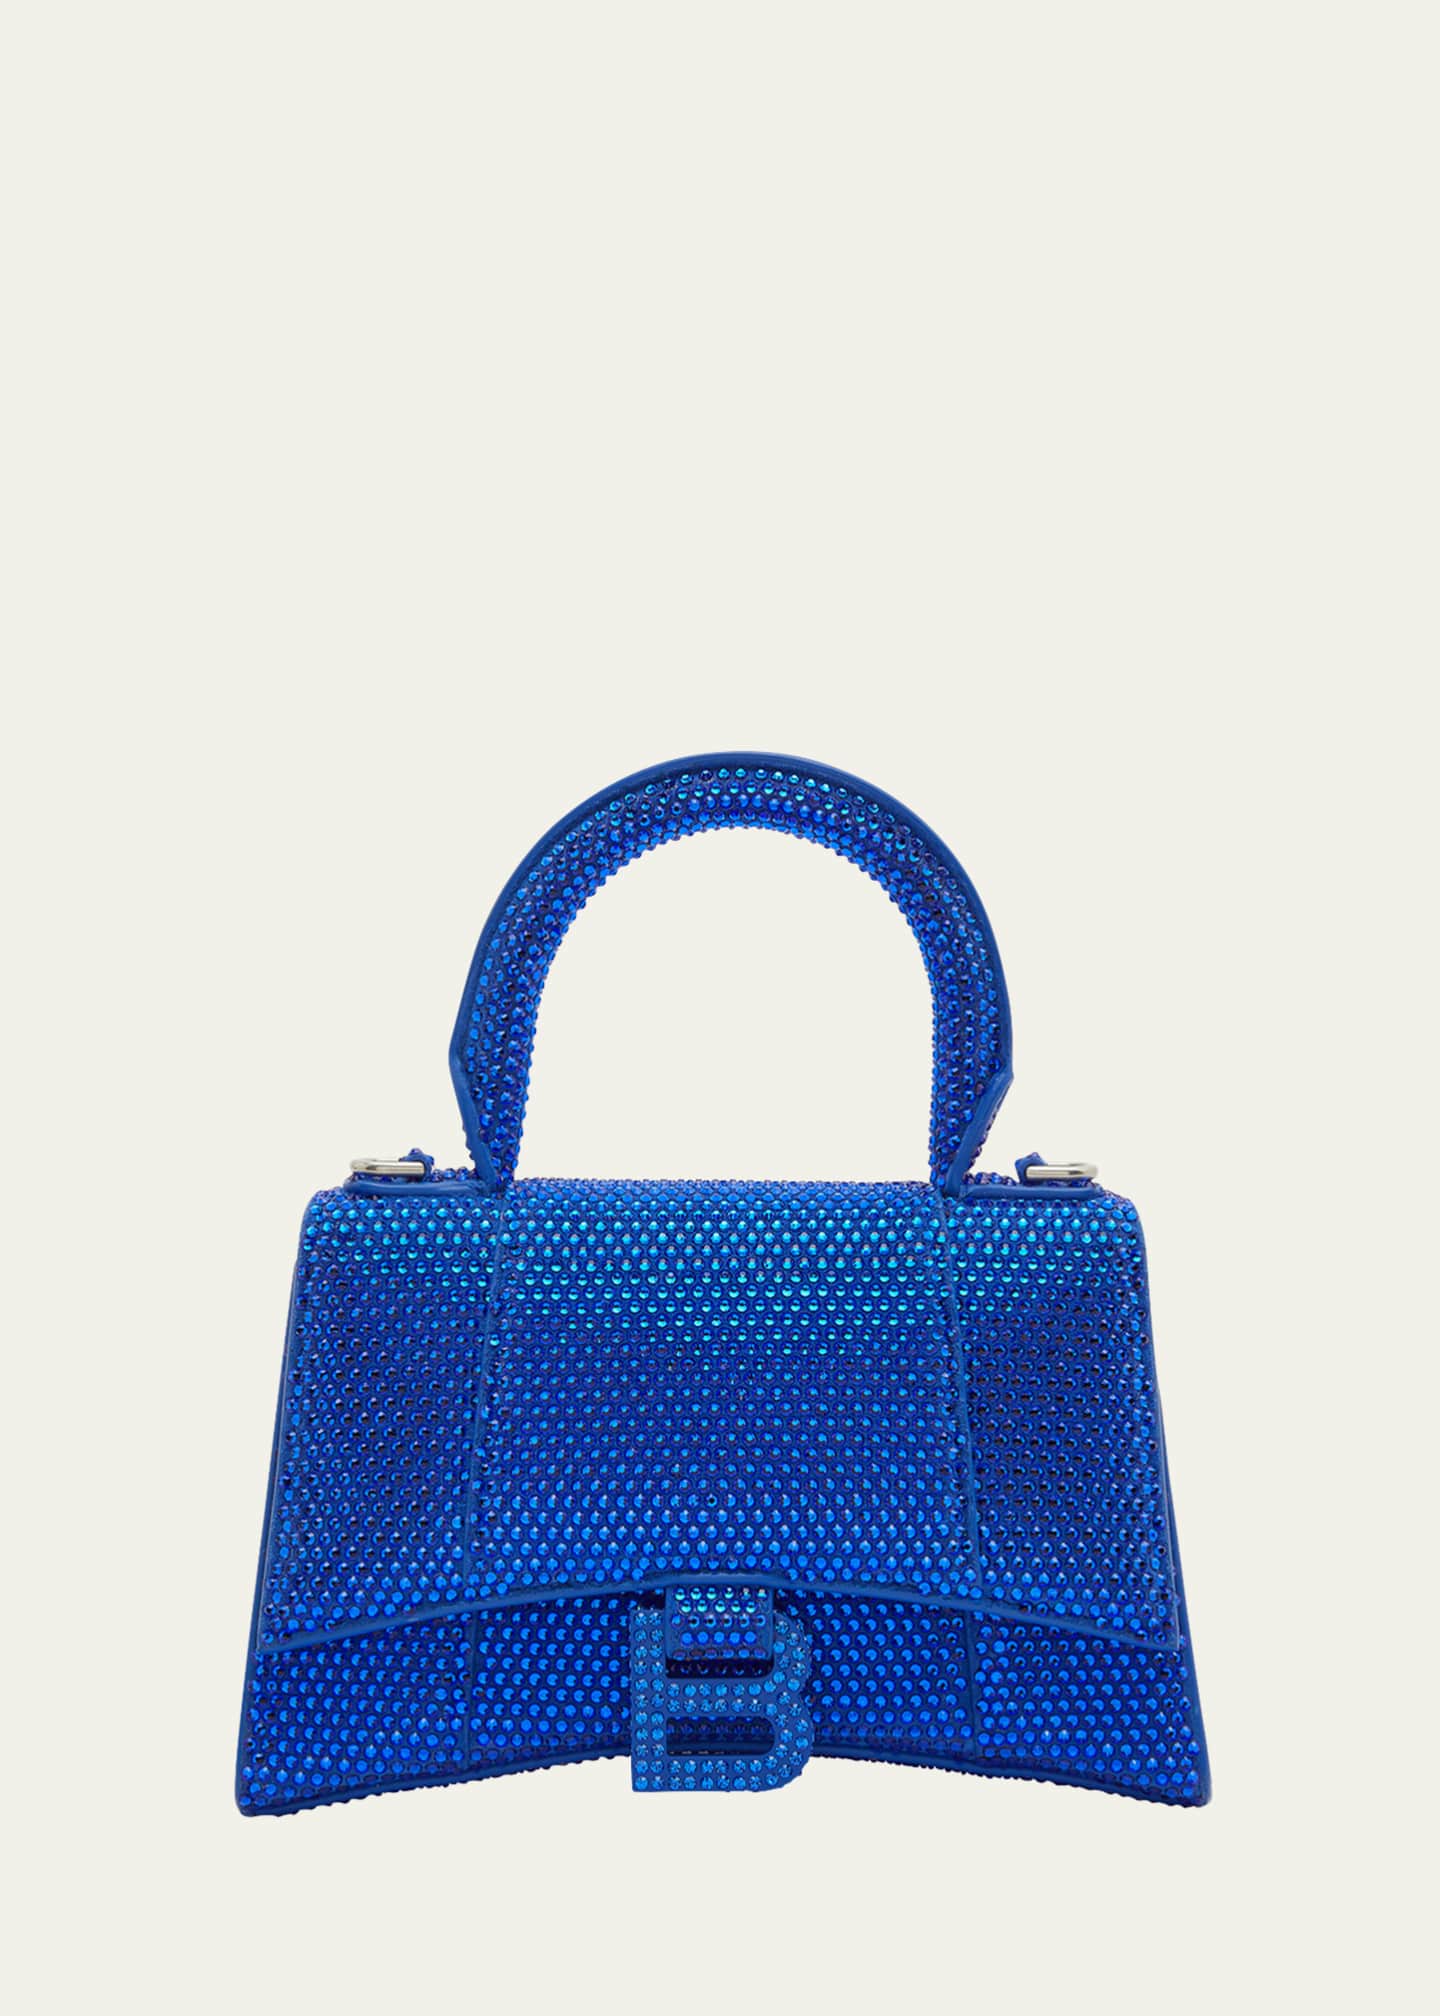 Balenciaga Hourglass Mini Leather Crossbody Bag in Blue